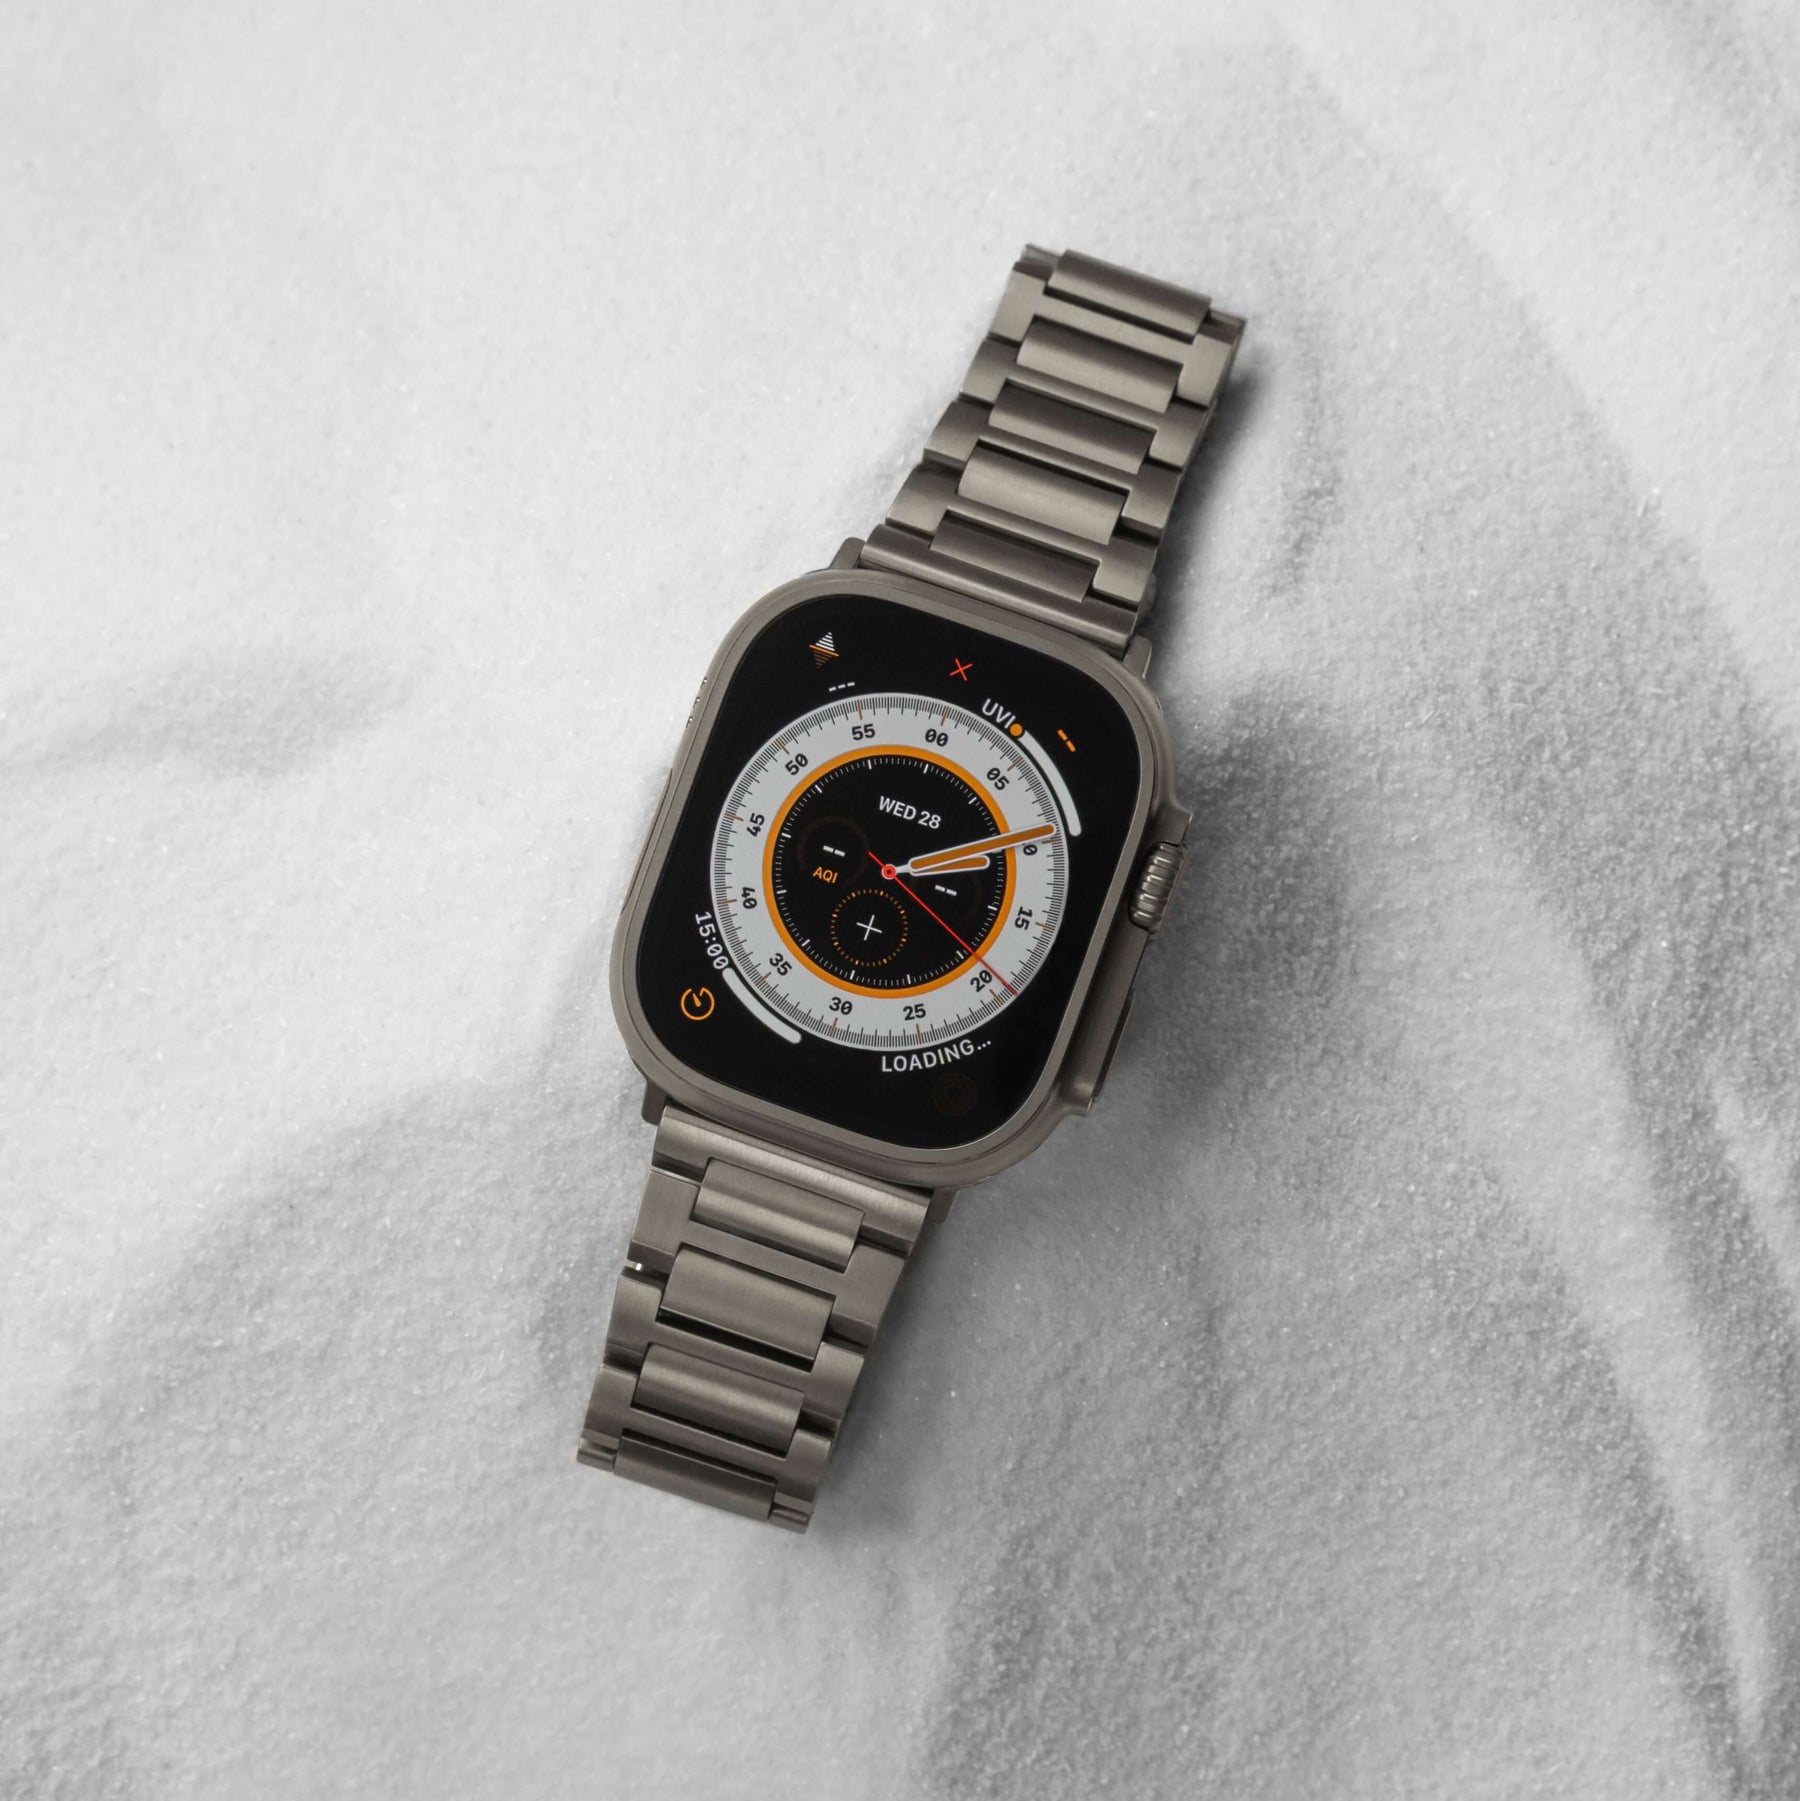 SANDMARC Stainless Steel Edition - Apple Watch Band | Black